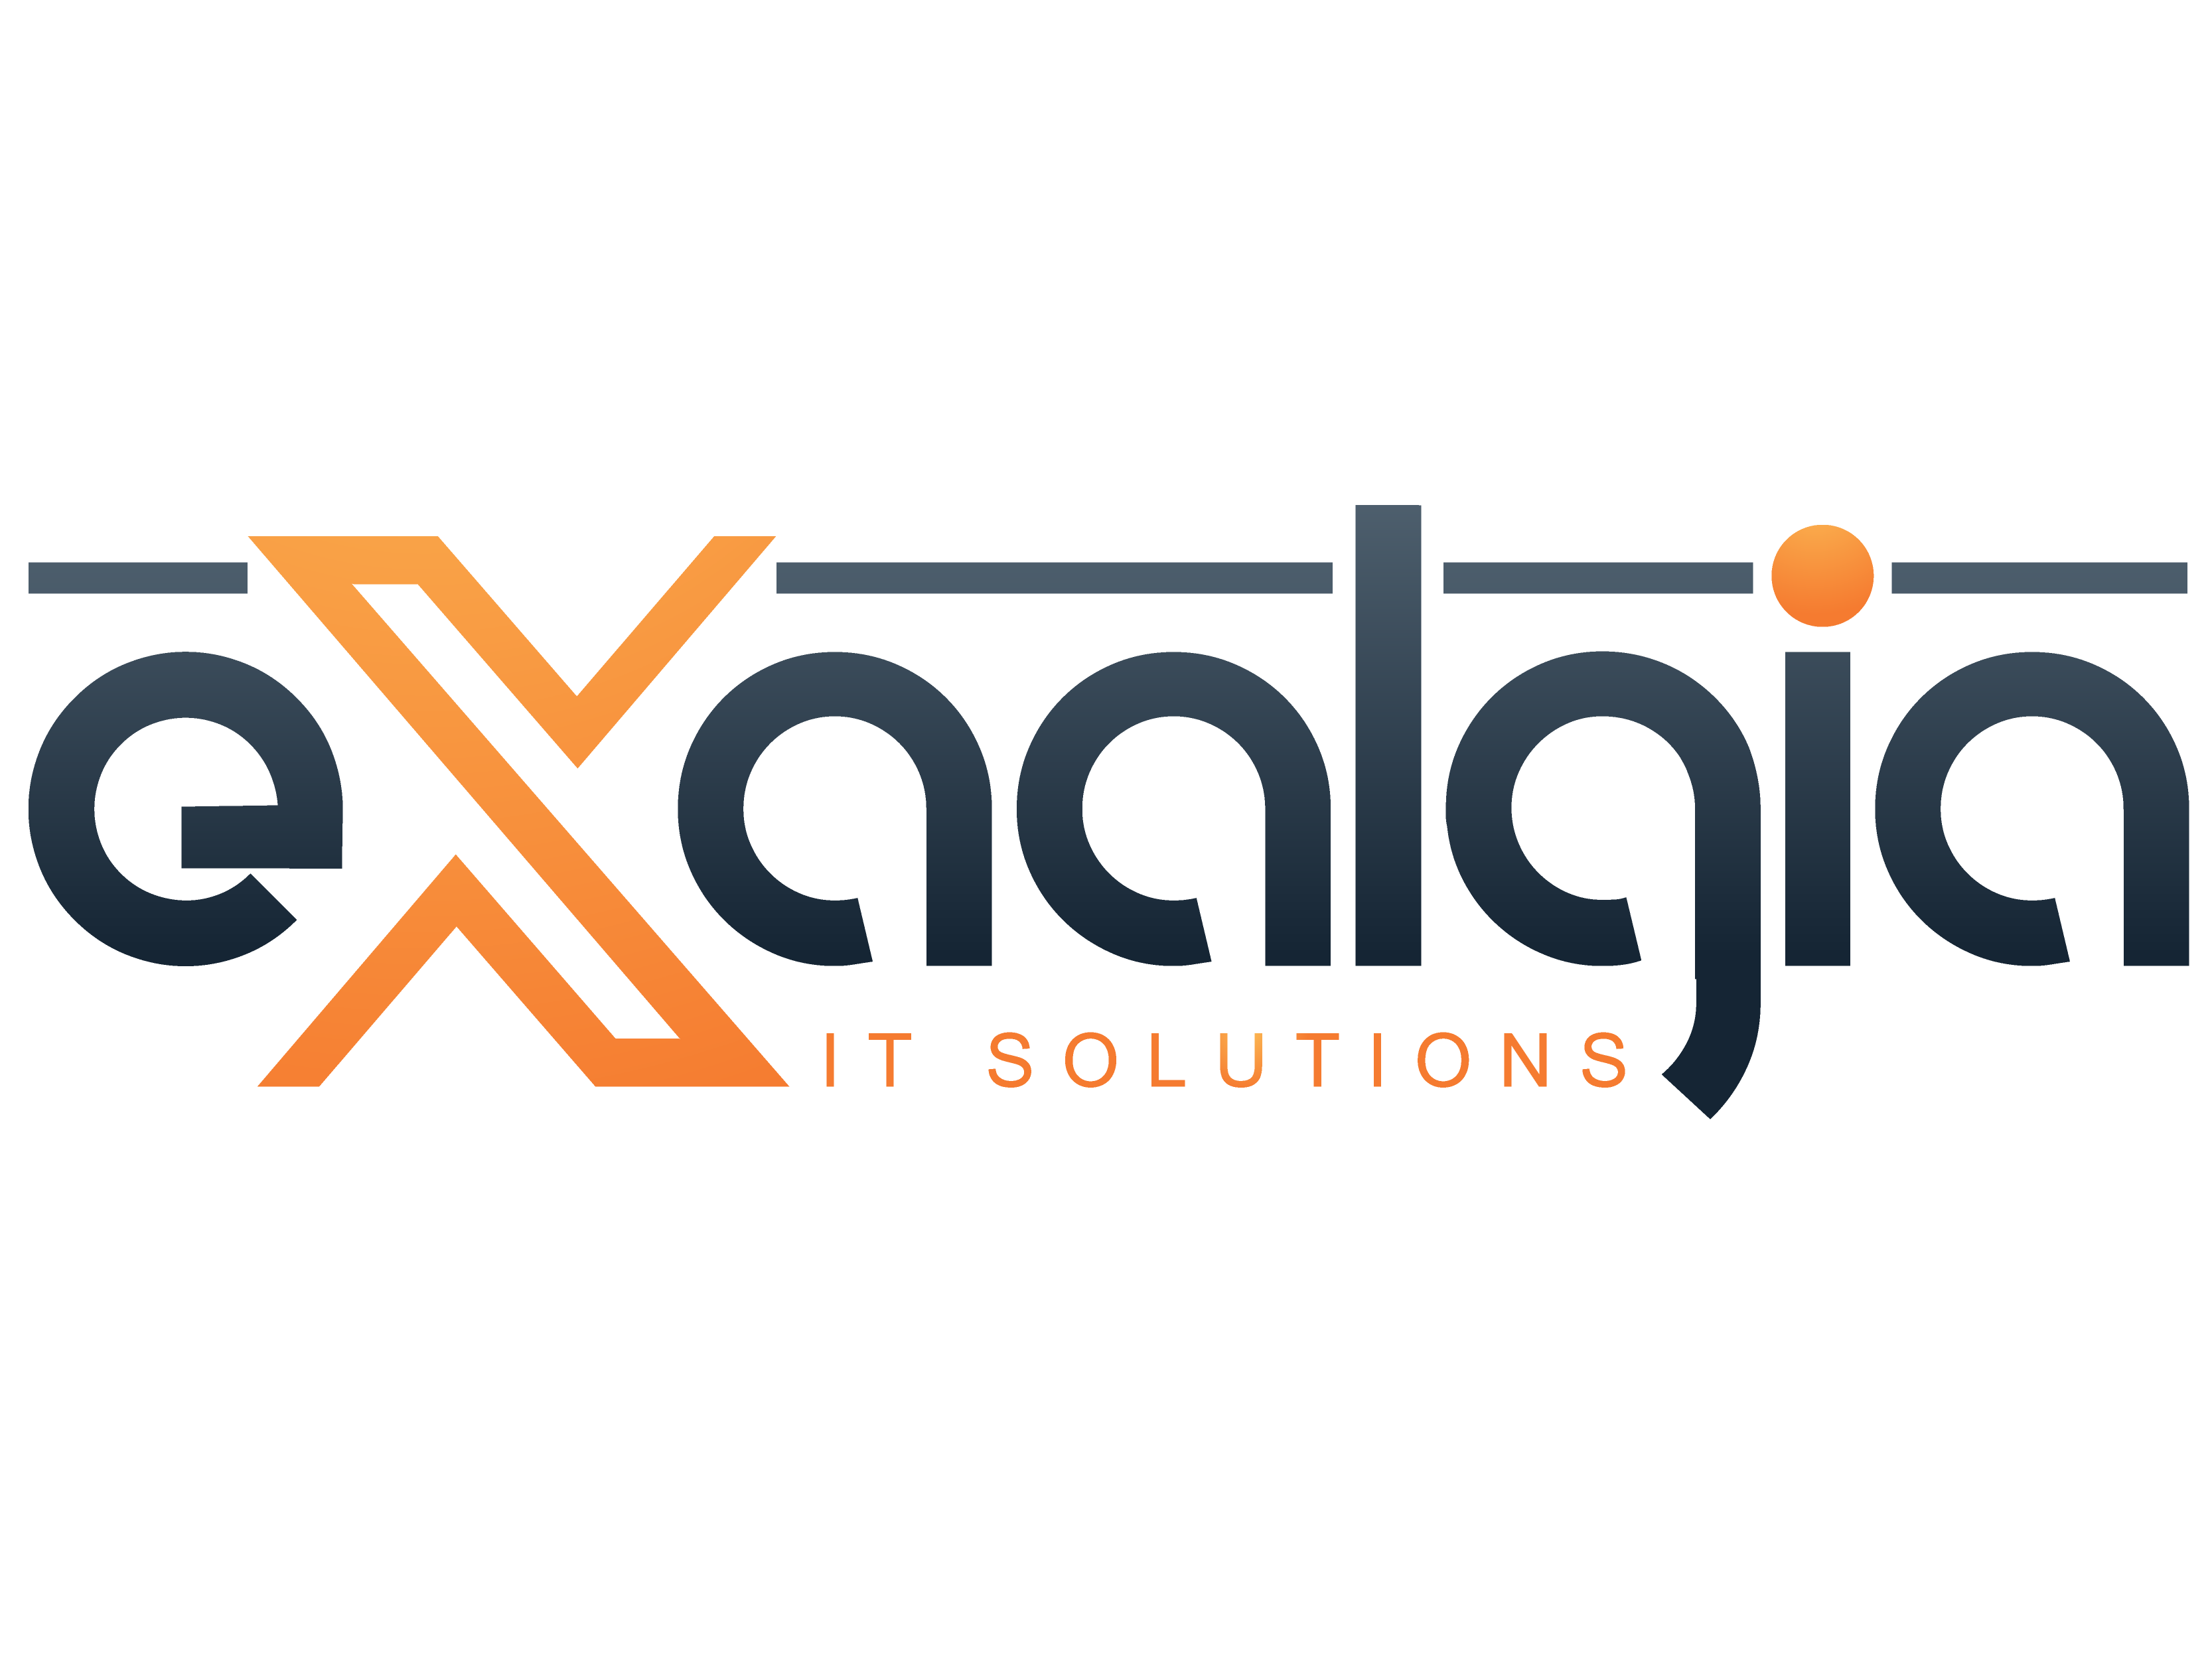 Top Search Engine Optimization Agency Logo: Exaalgia